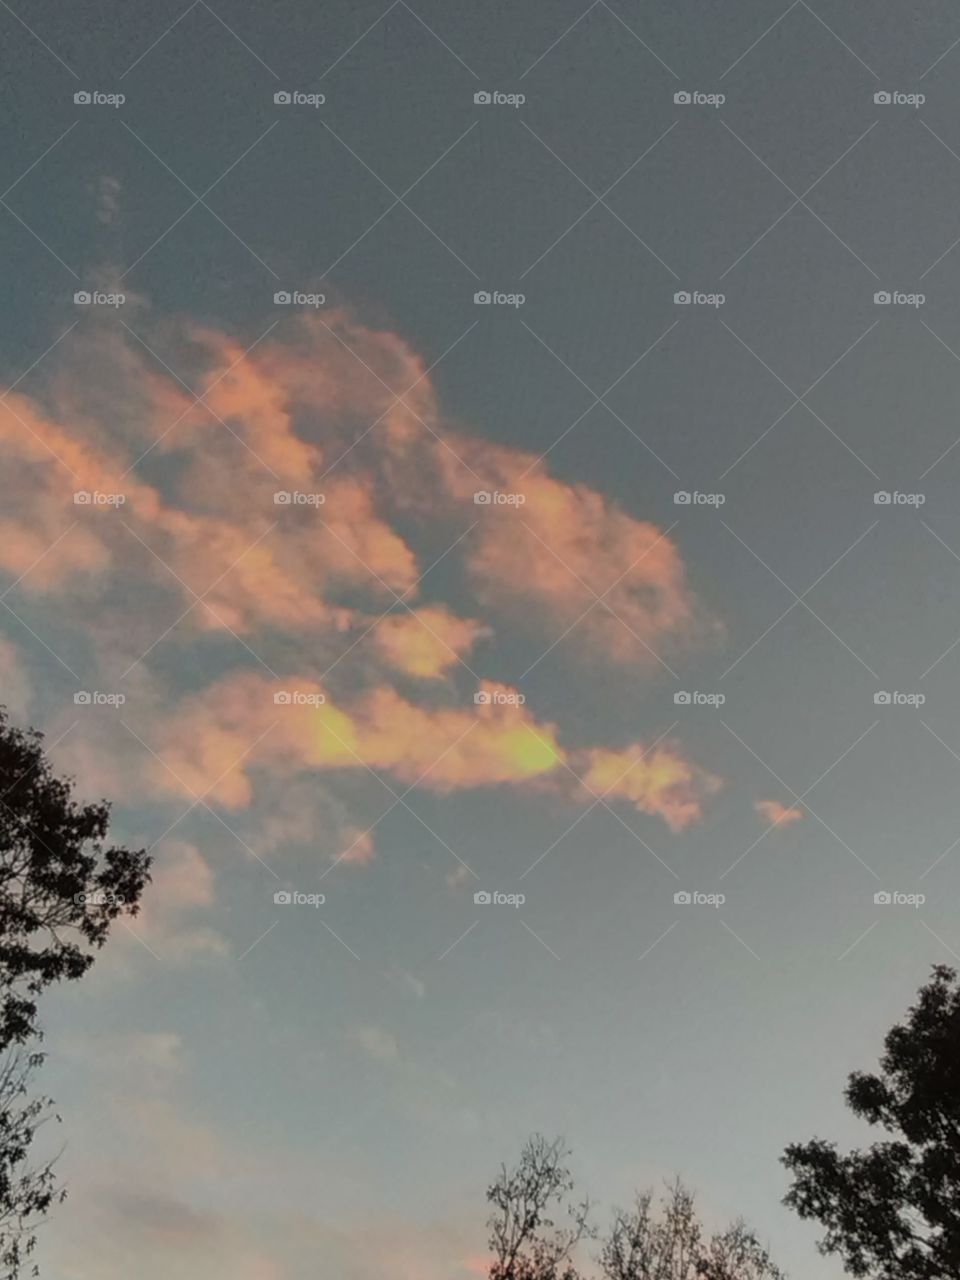 cloud picture